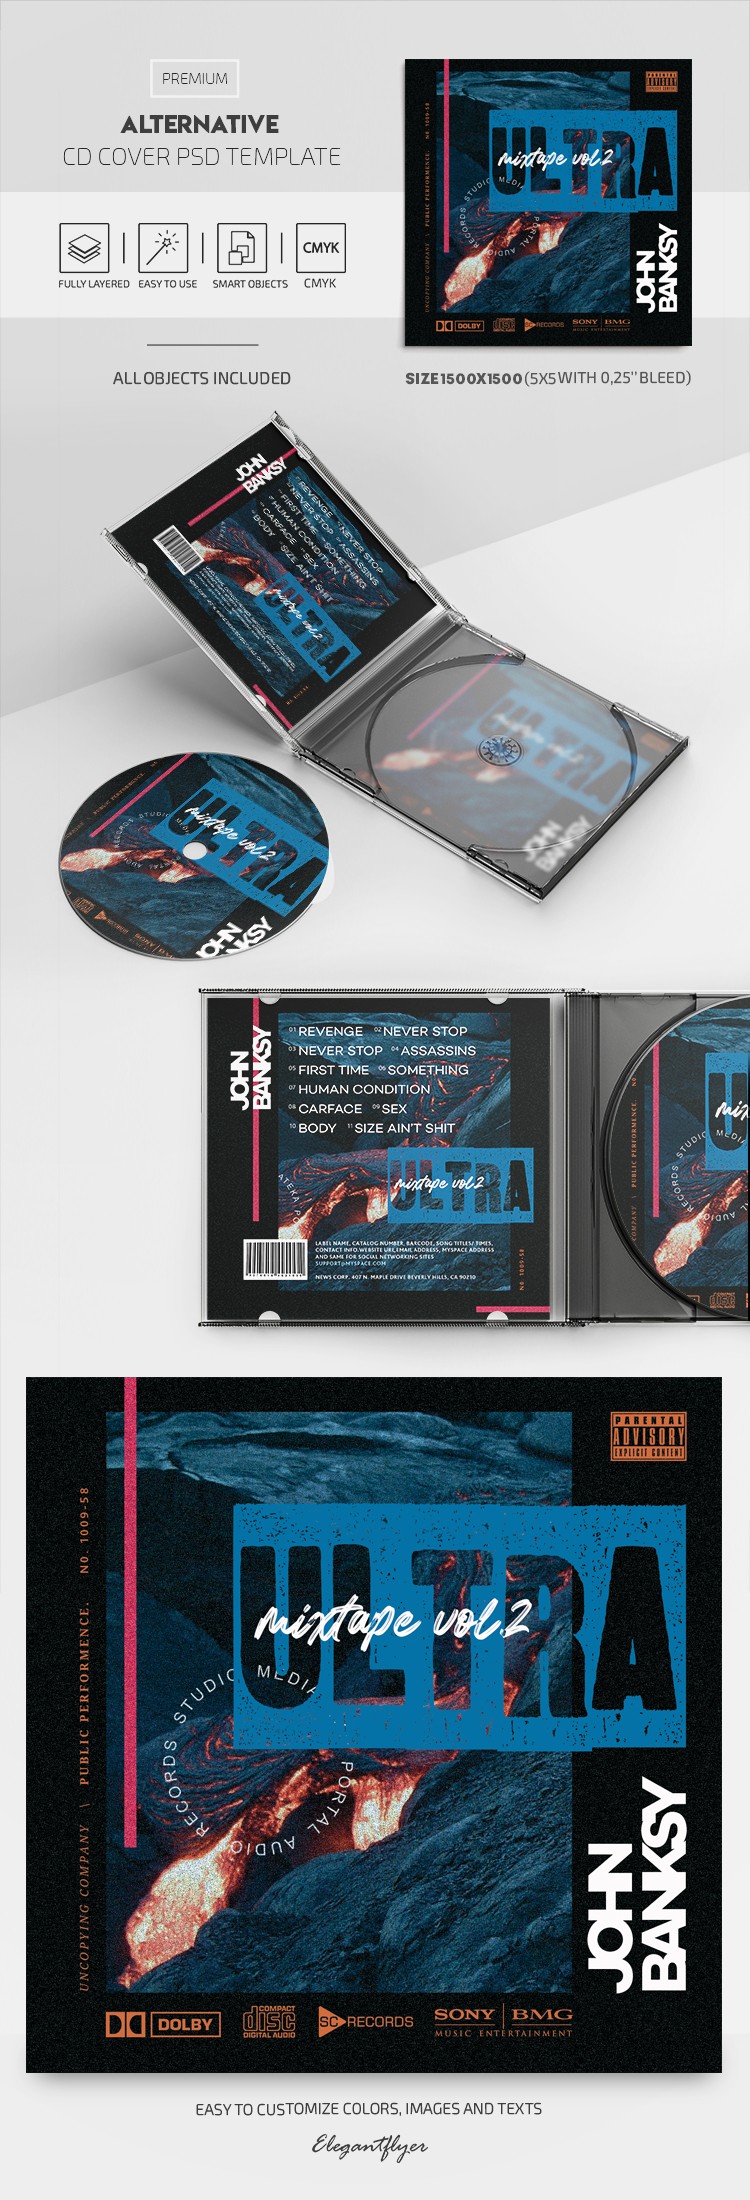 Alternative CD Cover - Couverture de CD Alternative by ElegantFlyer